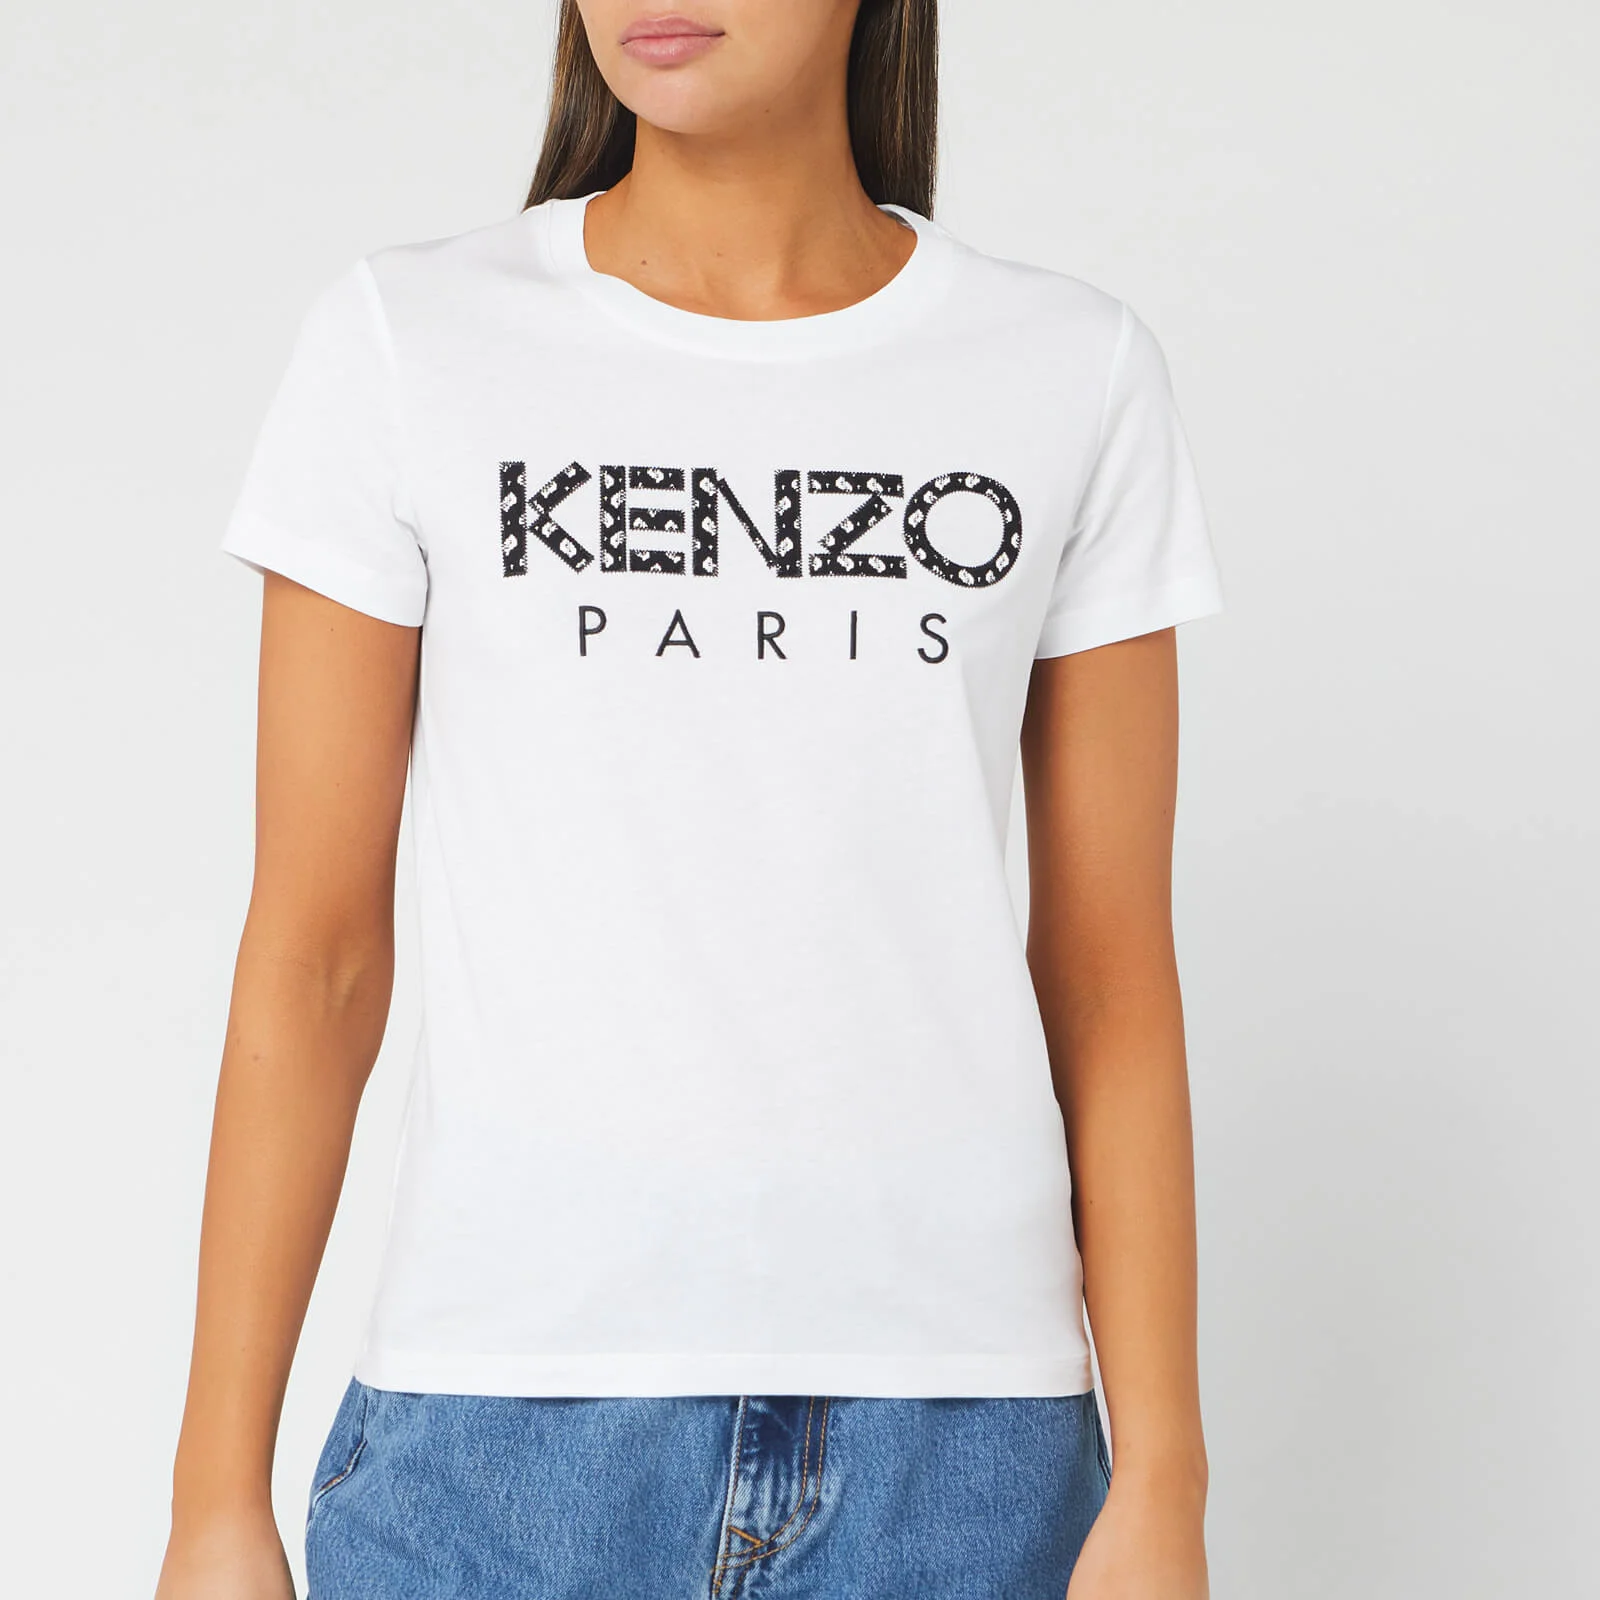 KENZO Women's Classic T-Shirt Kenzo Paris - White Image 1